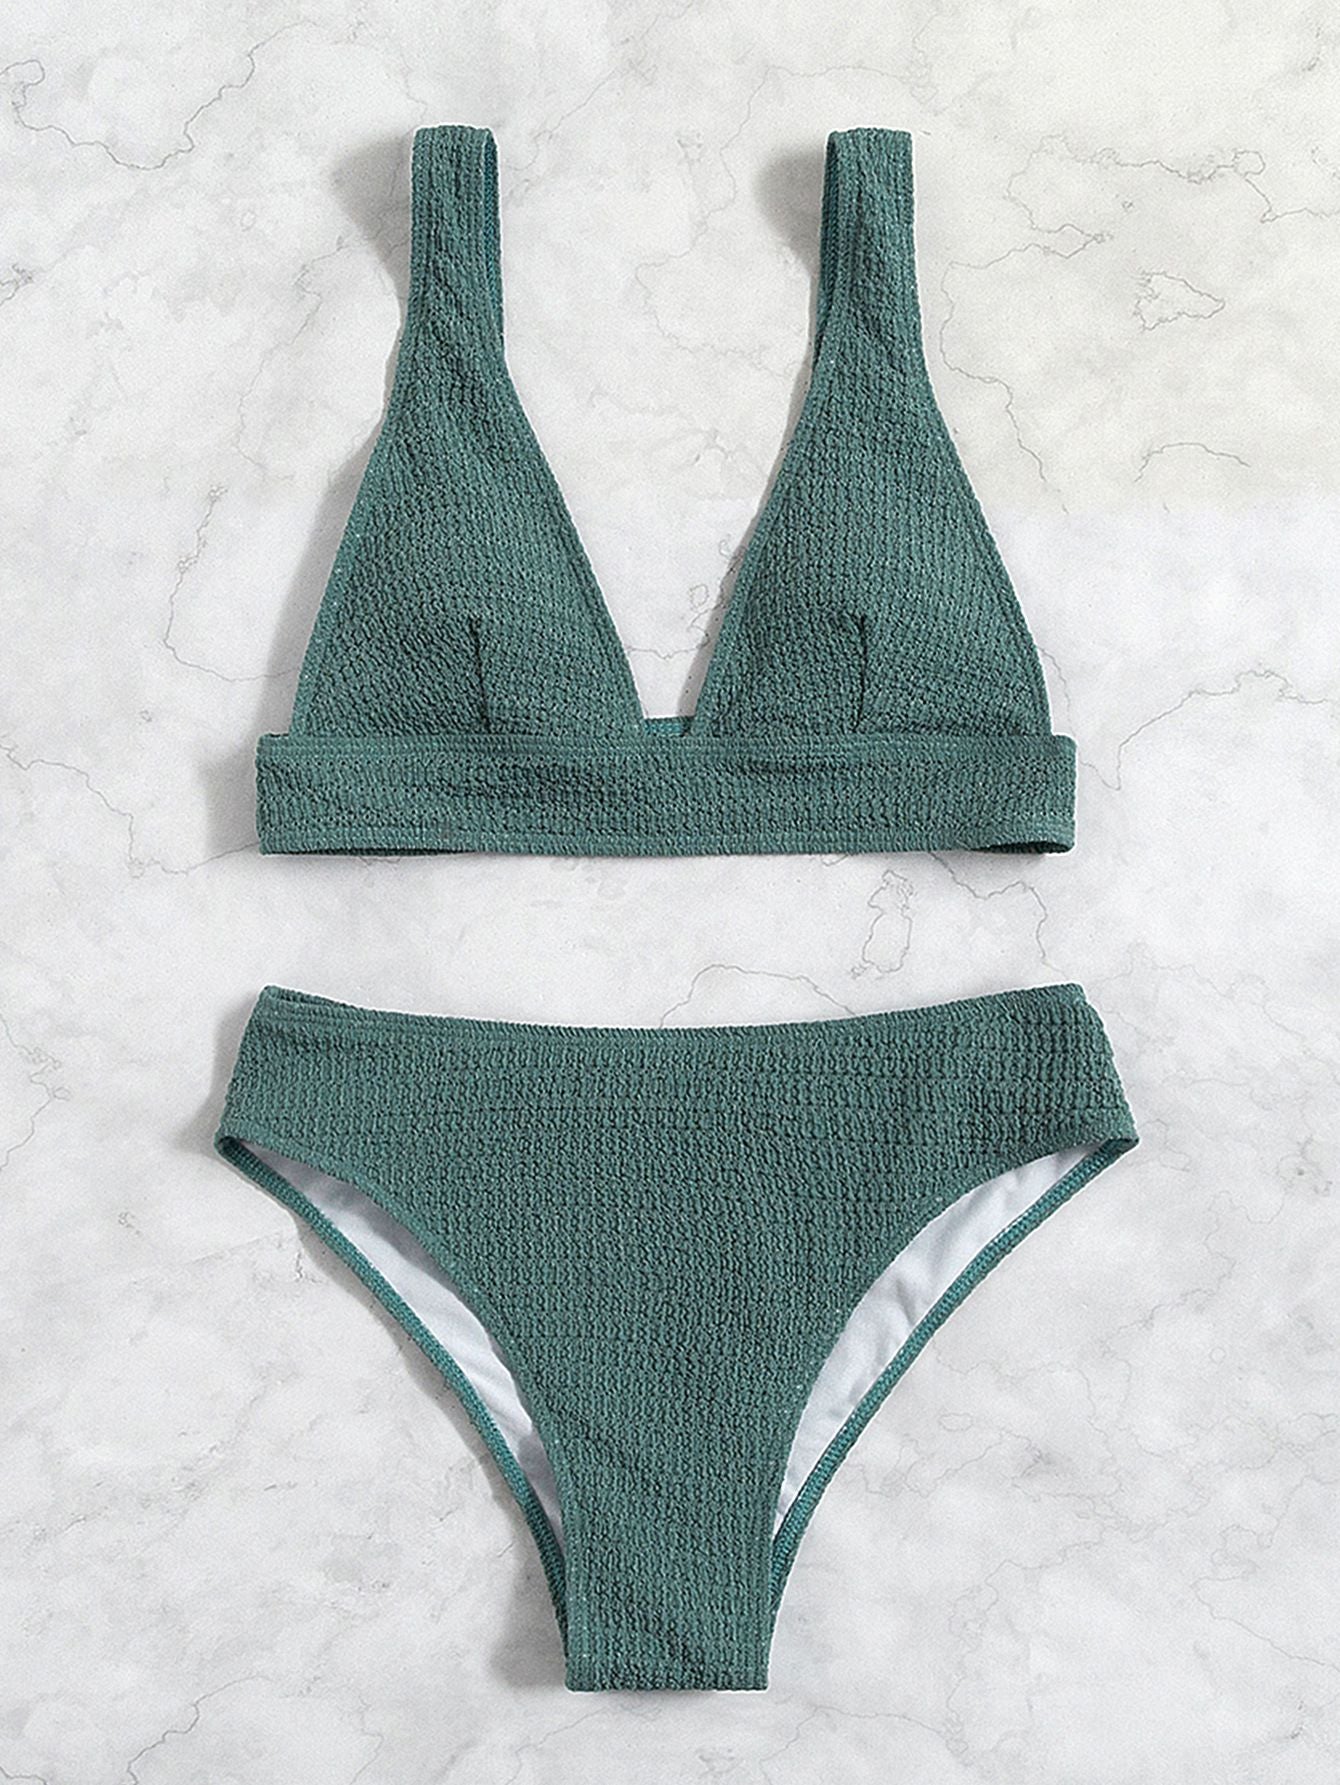 Stretchy Textured V Neck Triangle Bikini Vacation Swimsuit With Padding